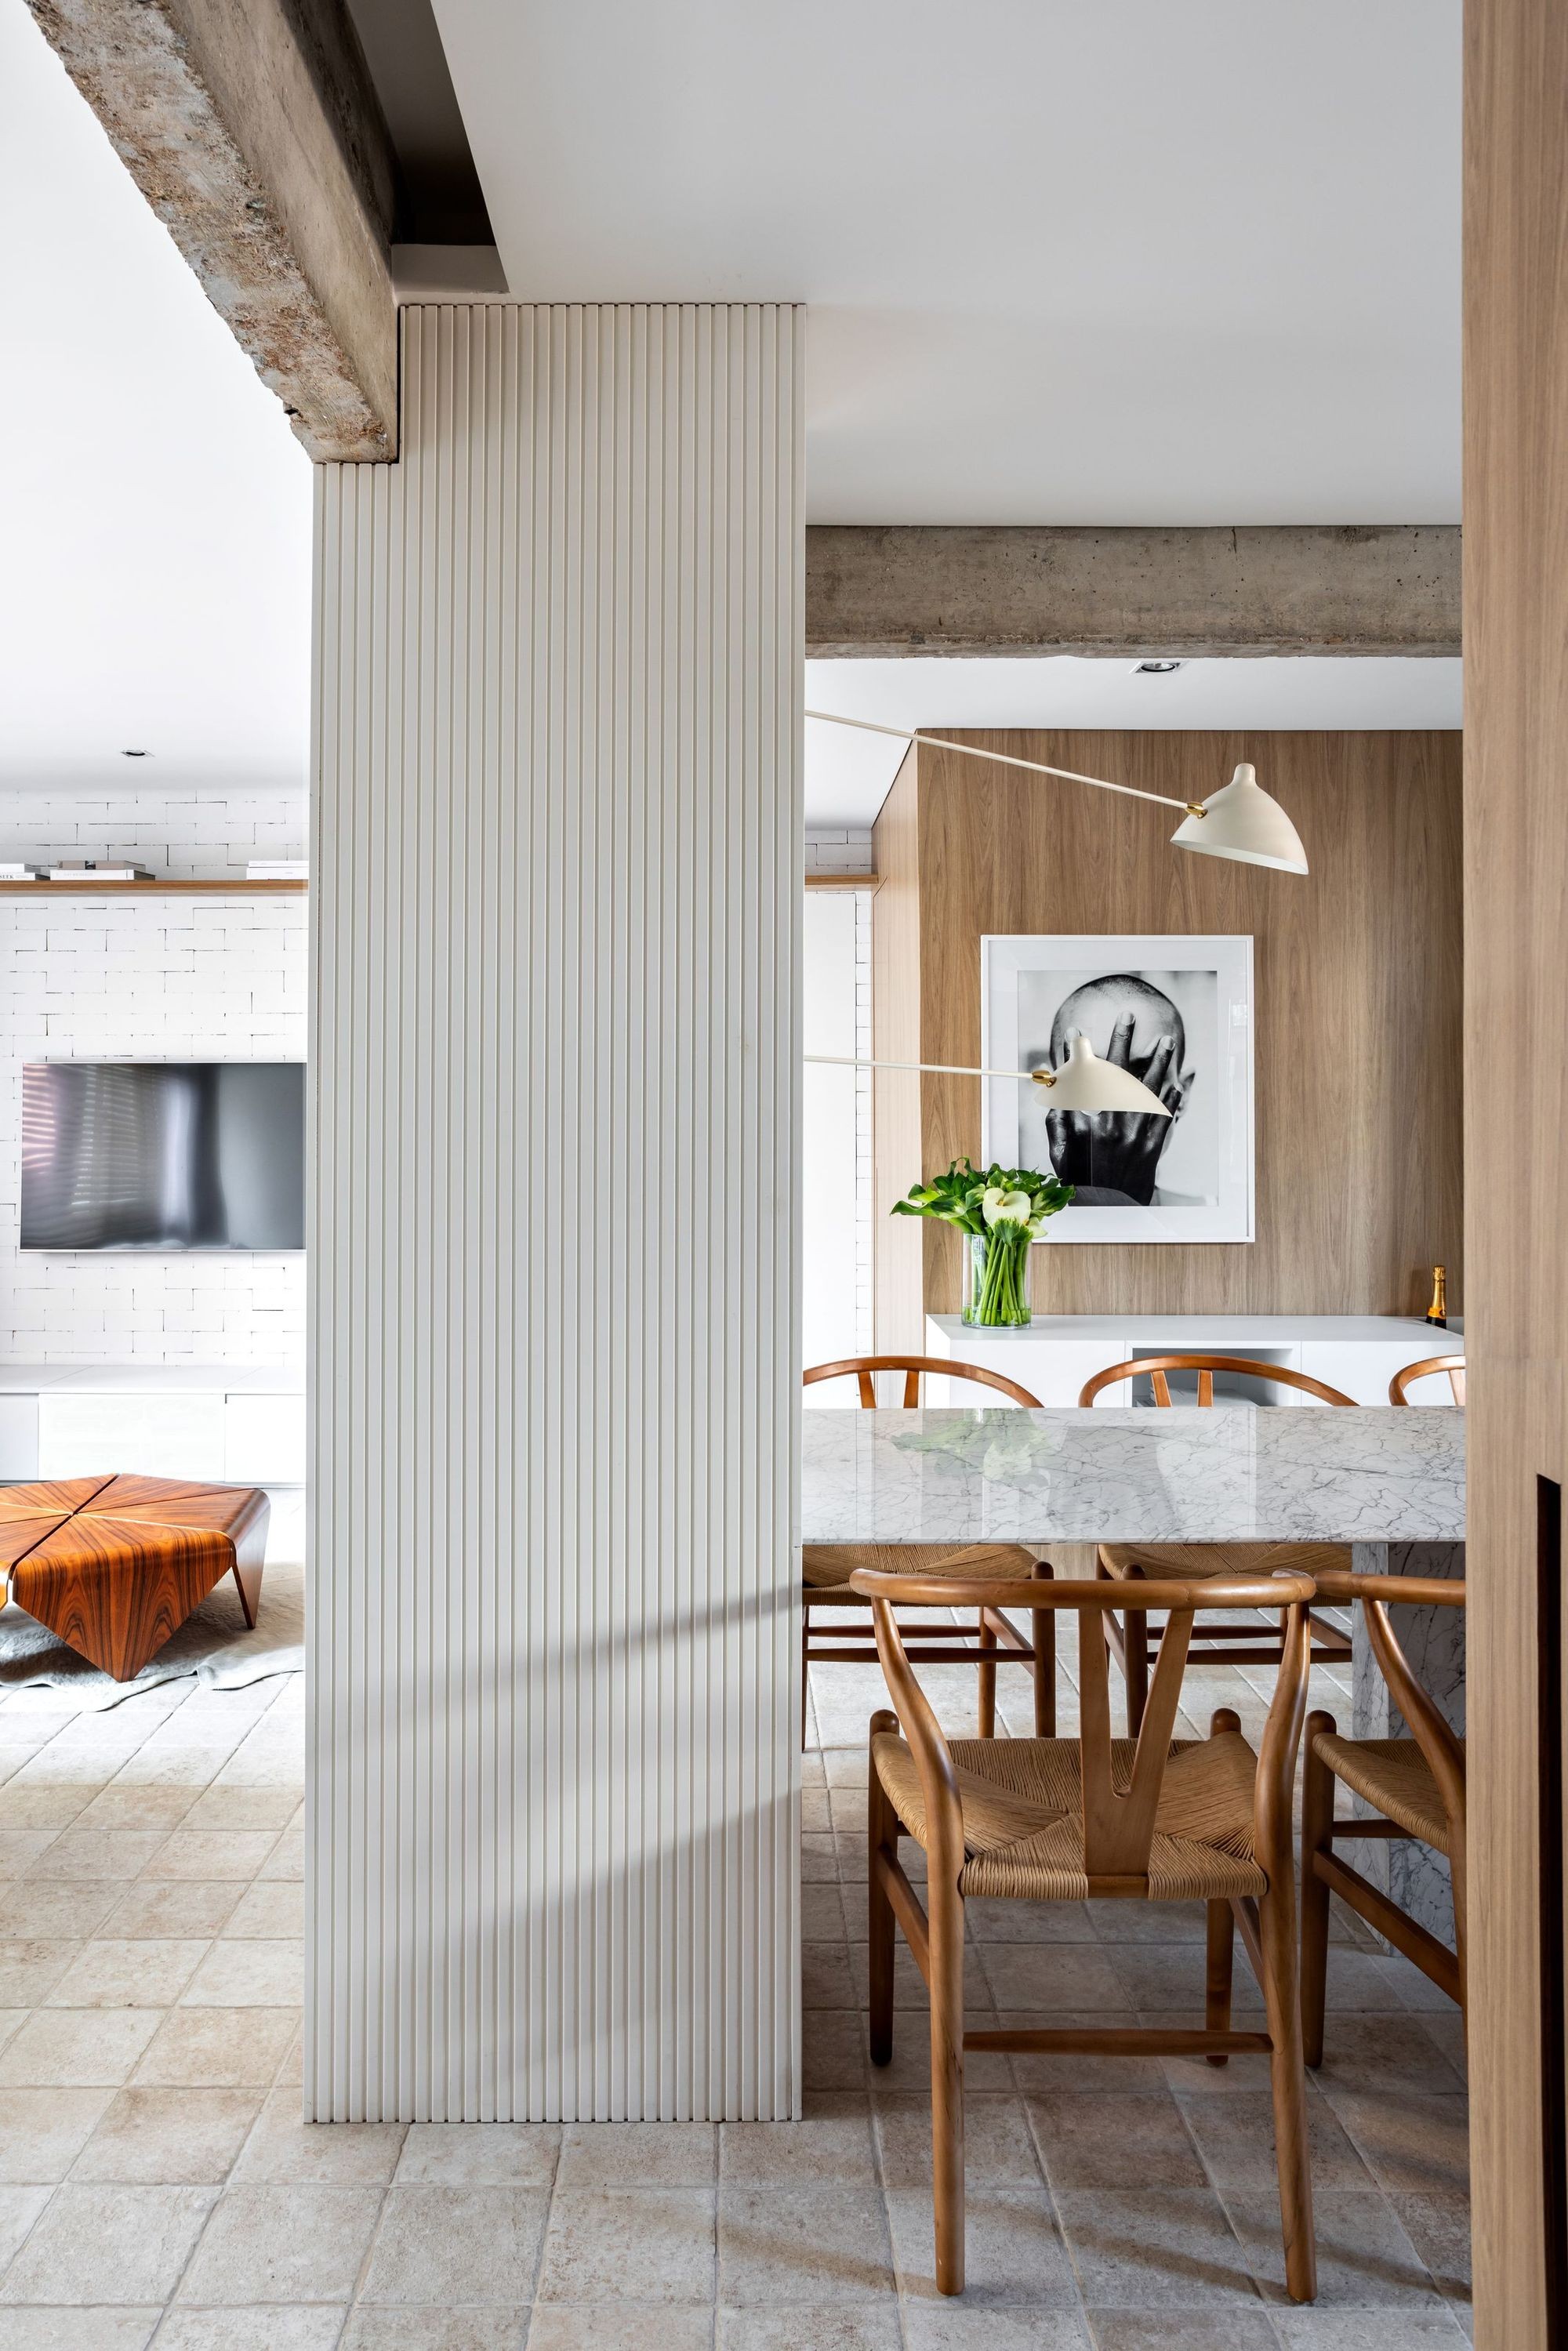 Décor do dia: tons de cinza e minimalismo na sala de jantar (Foto: Fran Parente)